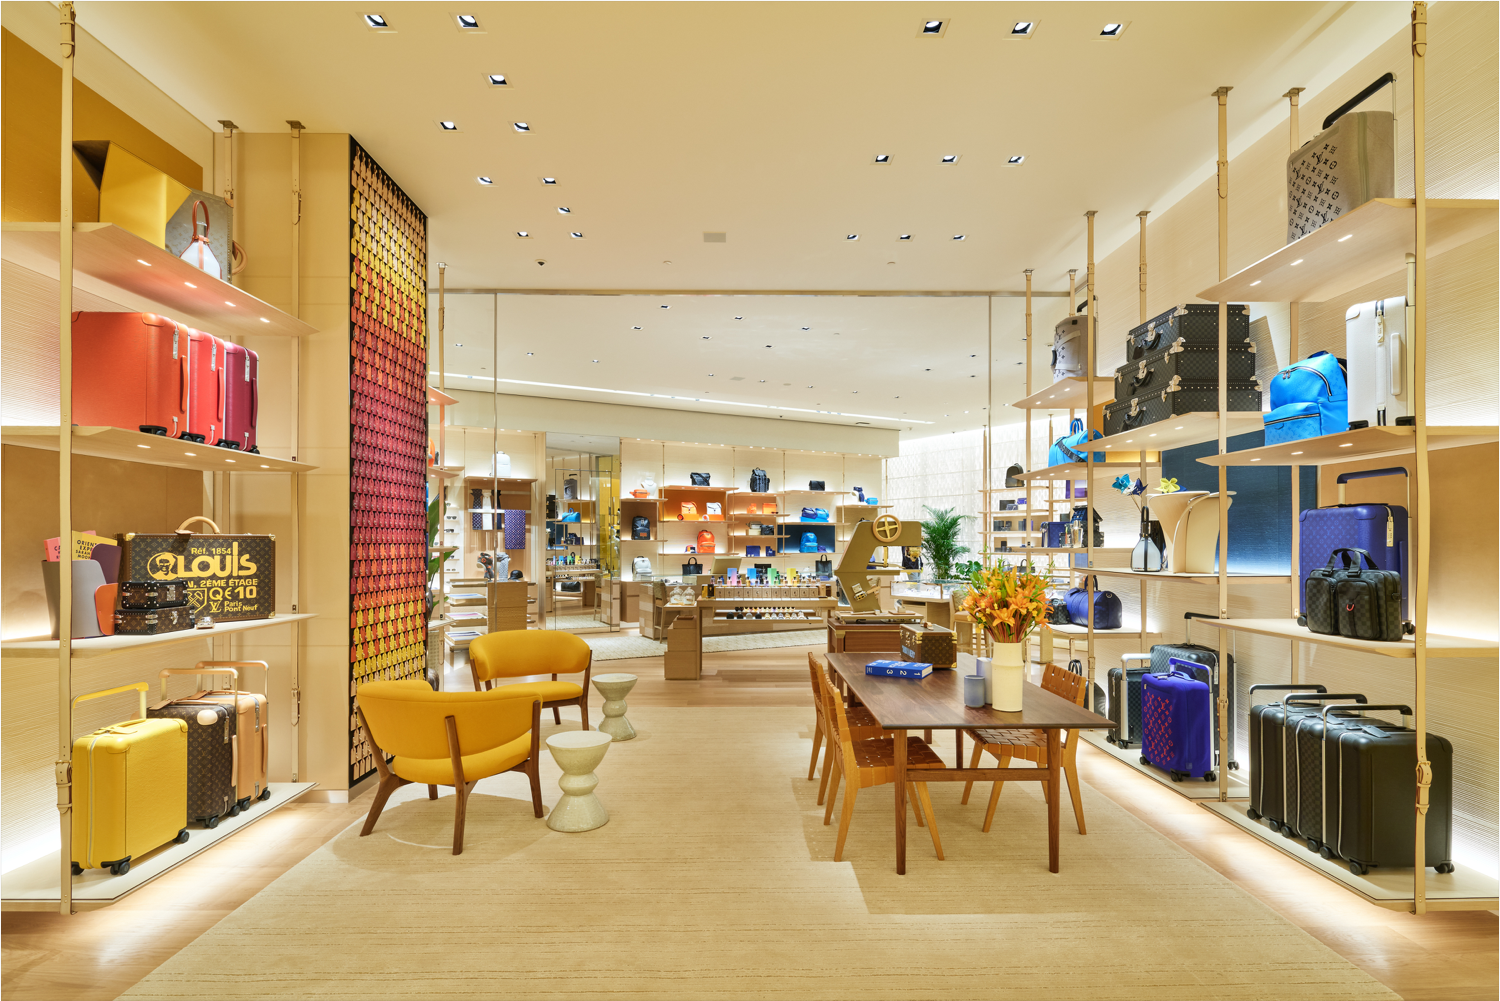 Louis Vuitton Unveils Tokyo Store